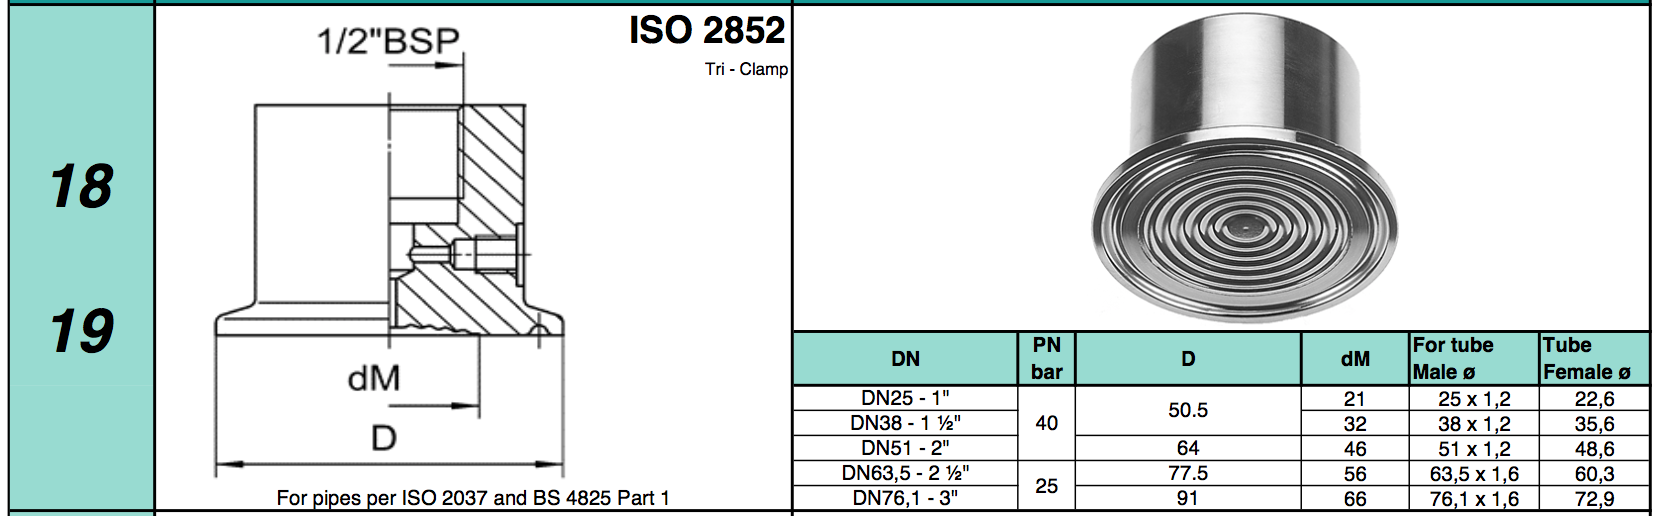 chuẩn kết nối dạng Tri Clamp ISO 2852